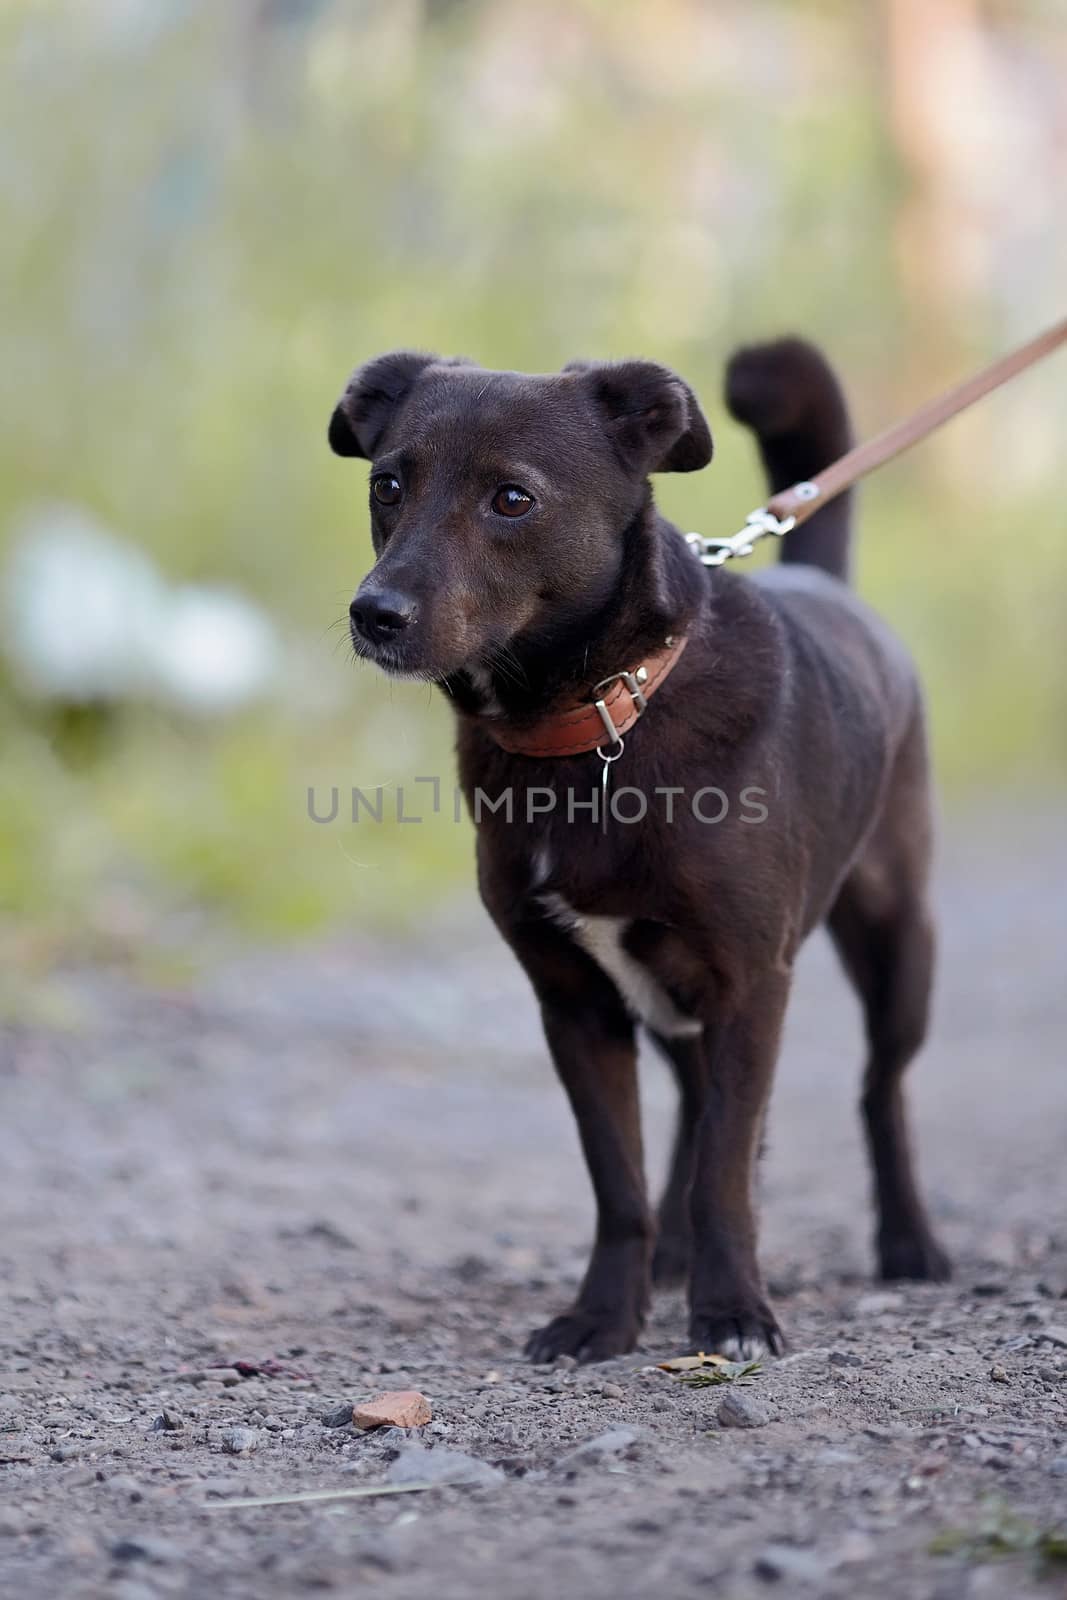 Small black doggie. Not purebred dog. Doggie on walk. The not purebred mongrel.